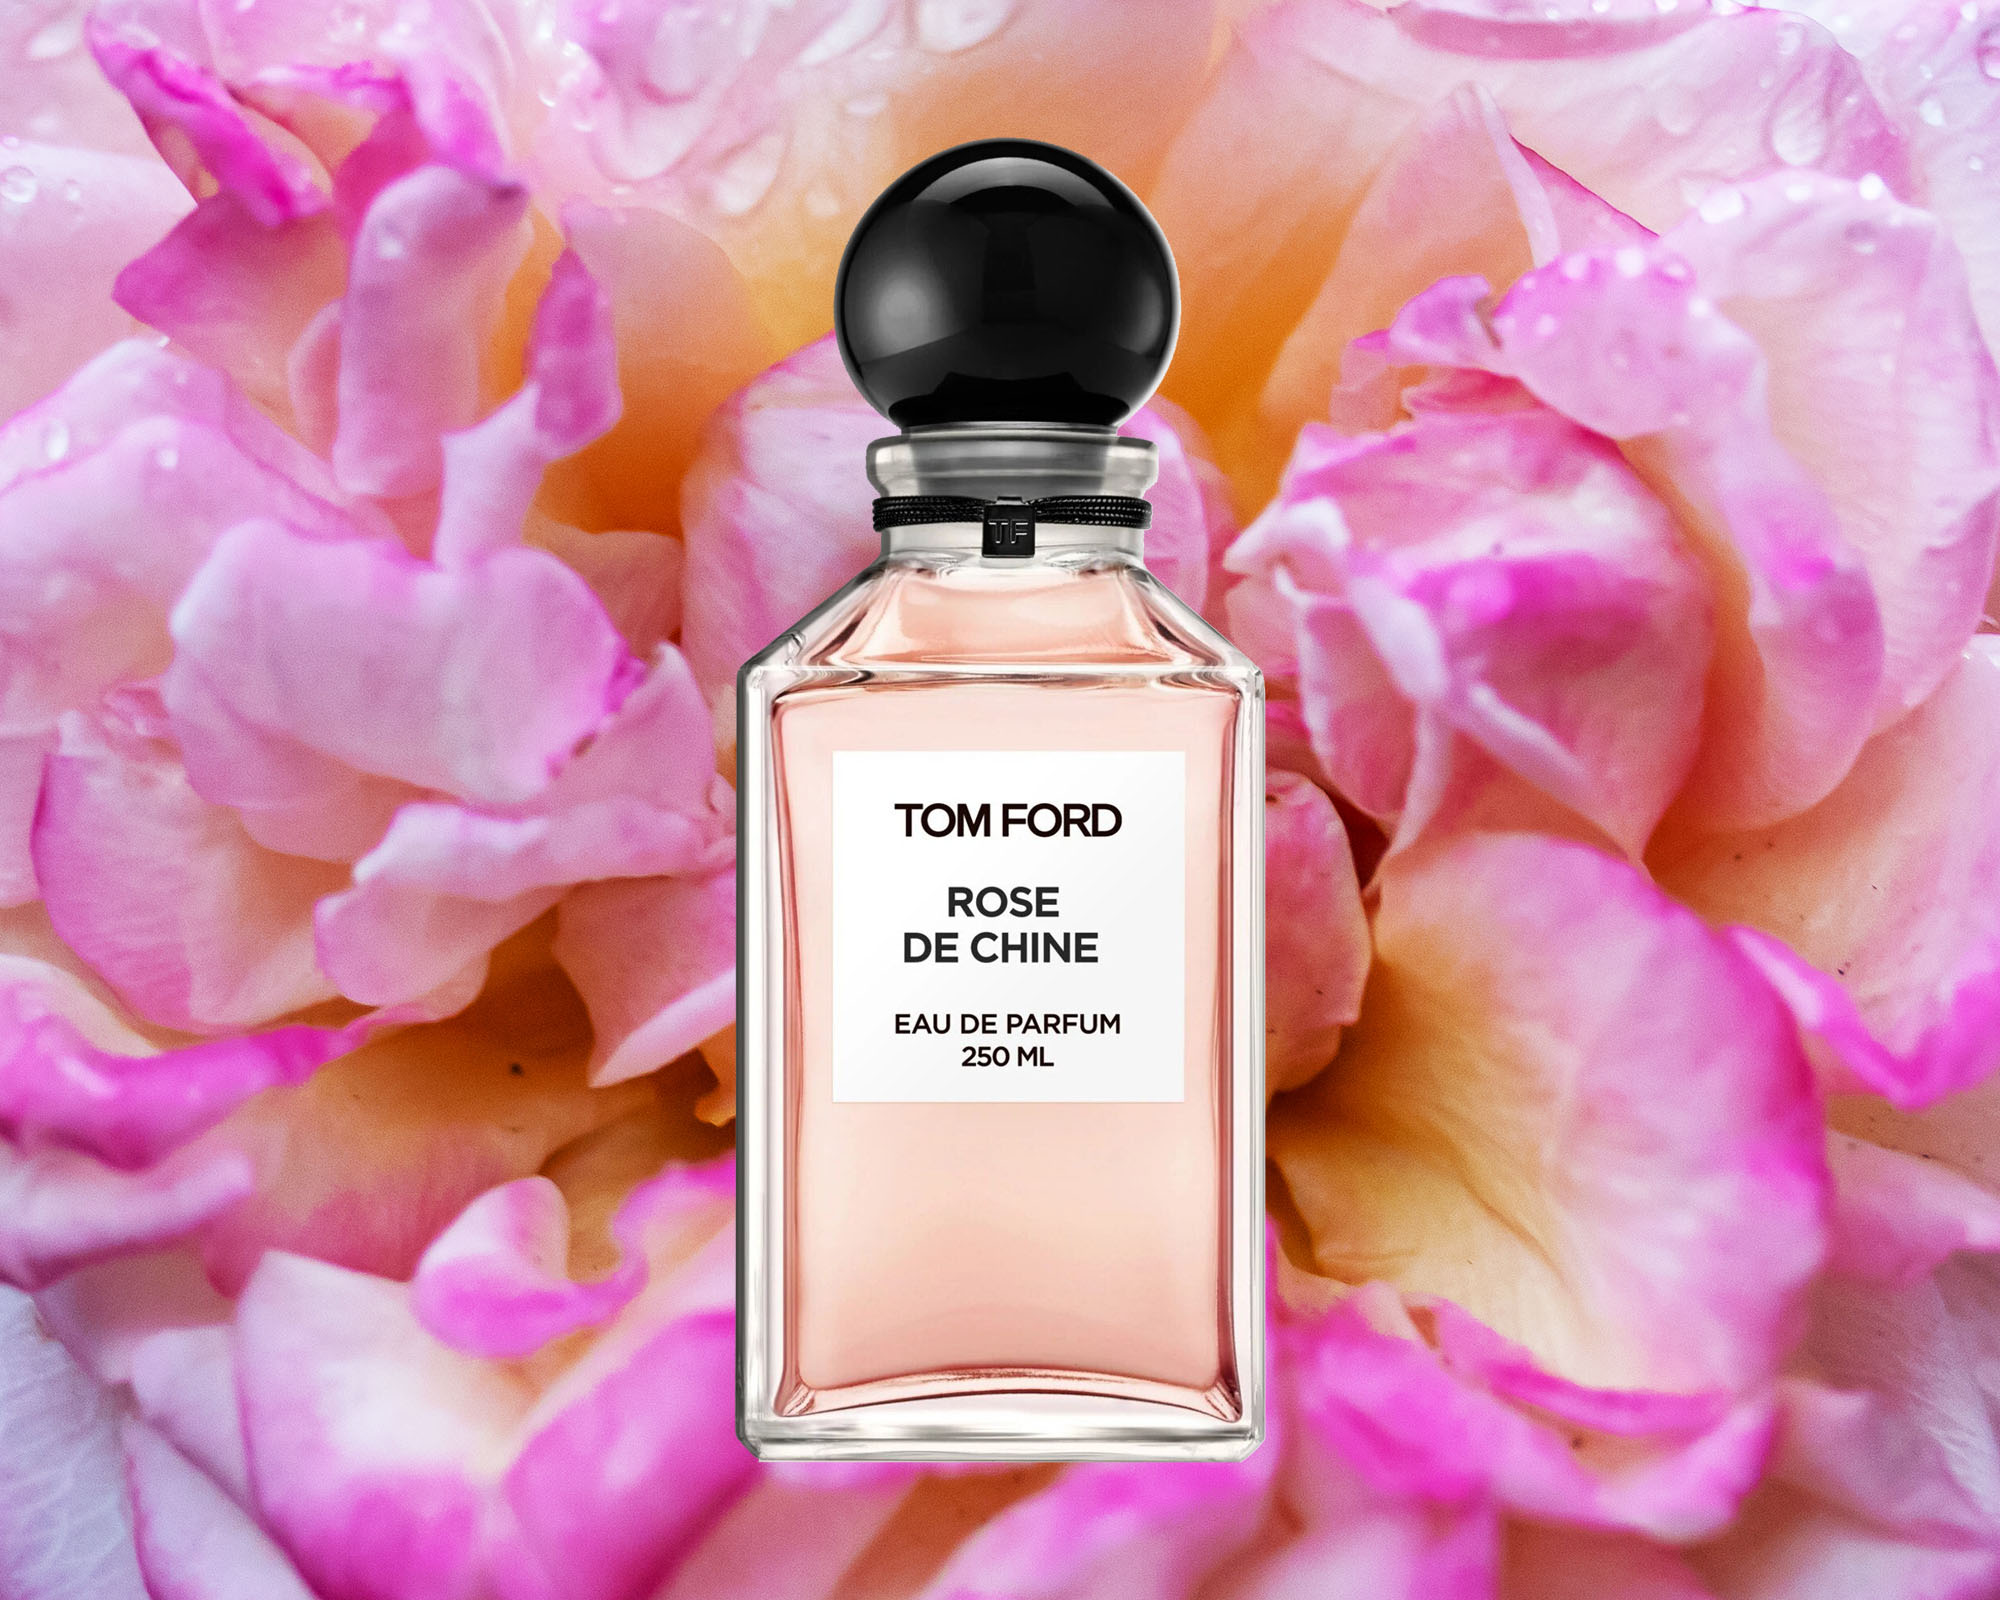 Tom Ford Private Rose Garden: a Rose Pilgrimage ~ Fragrance Reviews